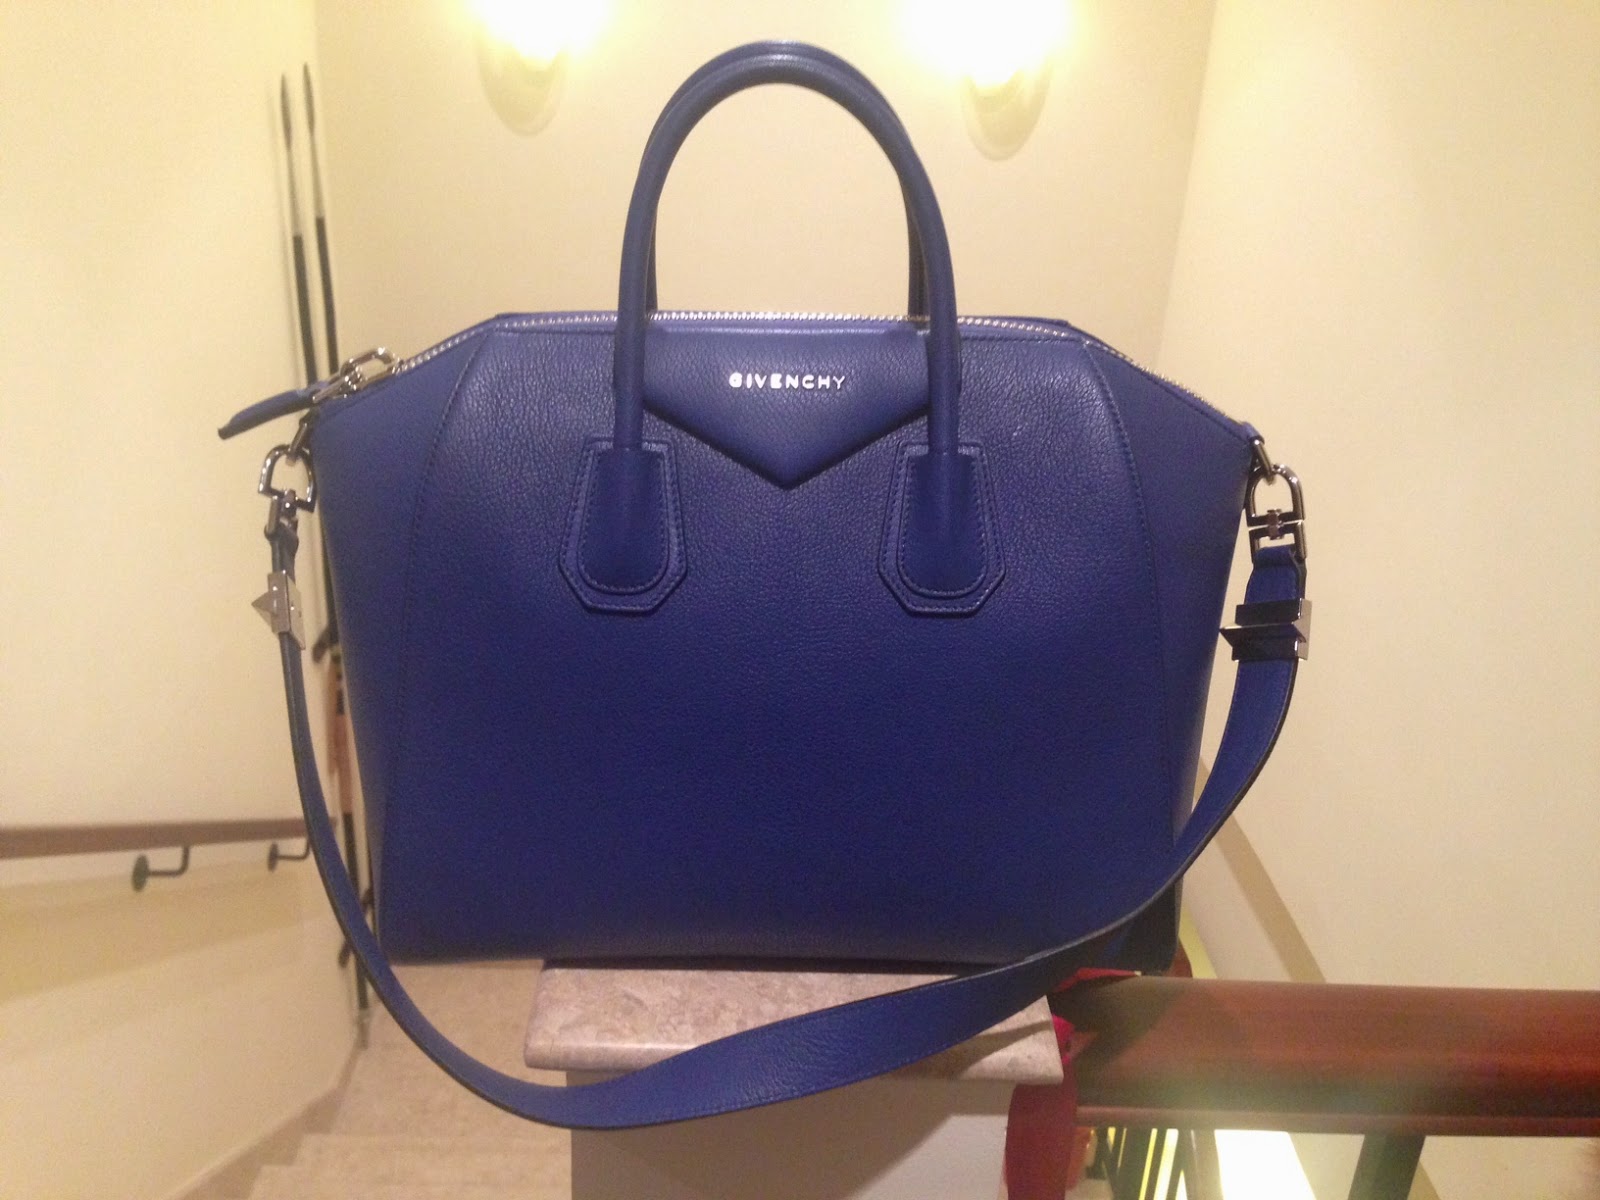 Bag Review - Givenchy Antigona Medium In Blue Leather